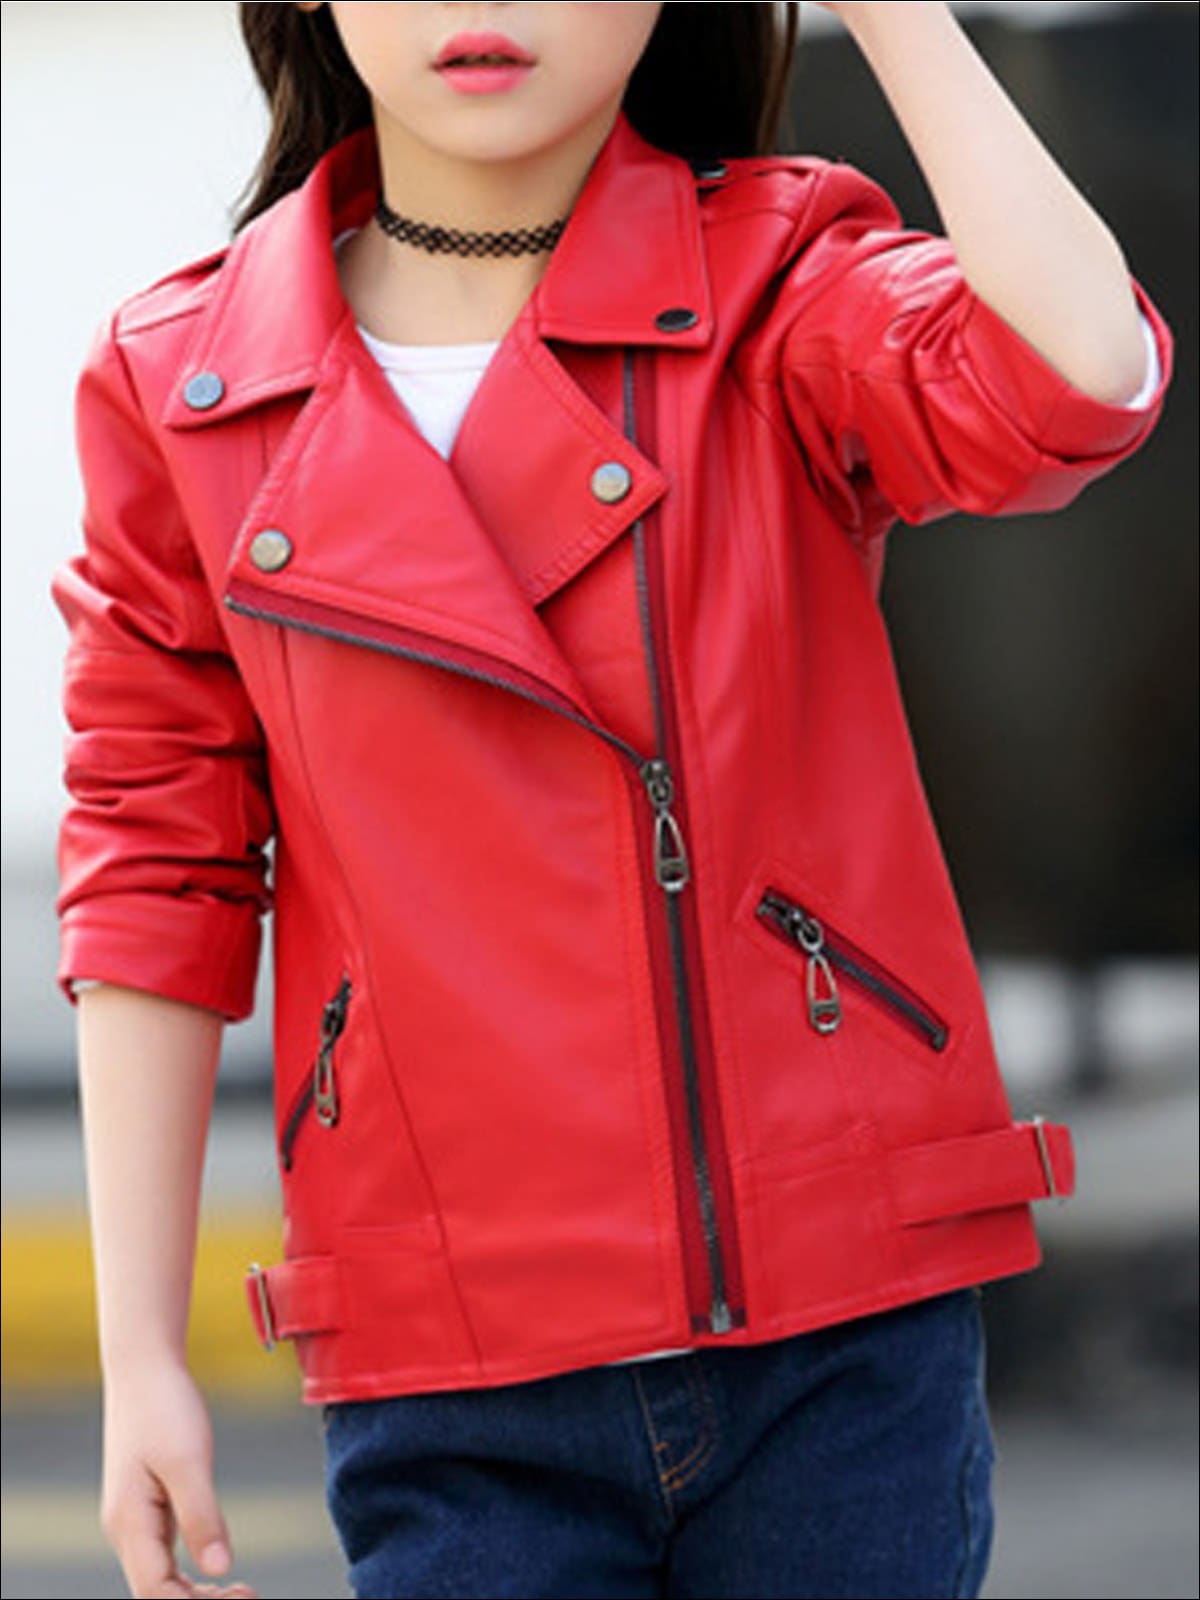 Girls Synthetic Leather Moto Jacket - Red / 3T - Girls Jacket